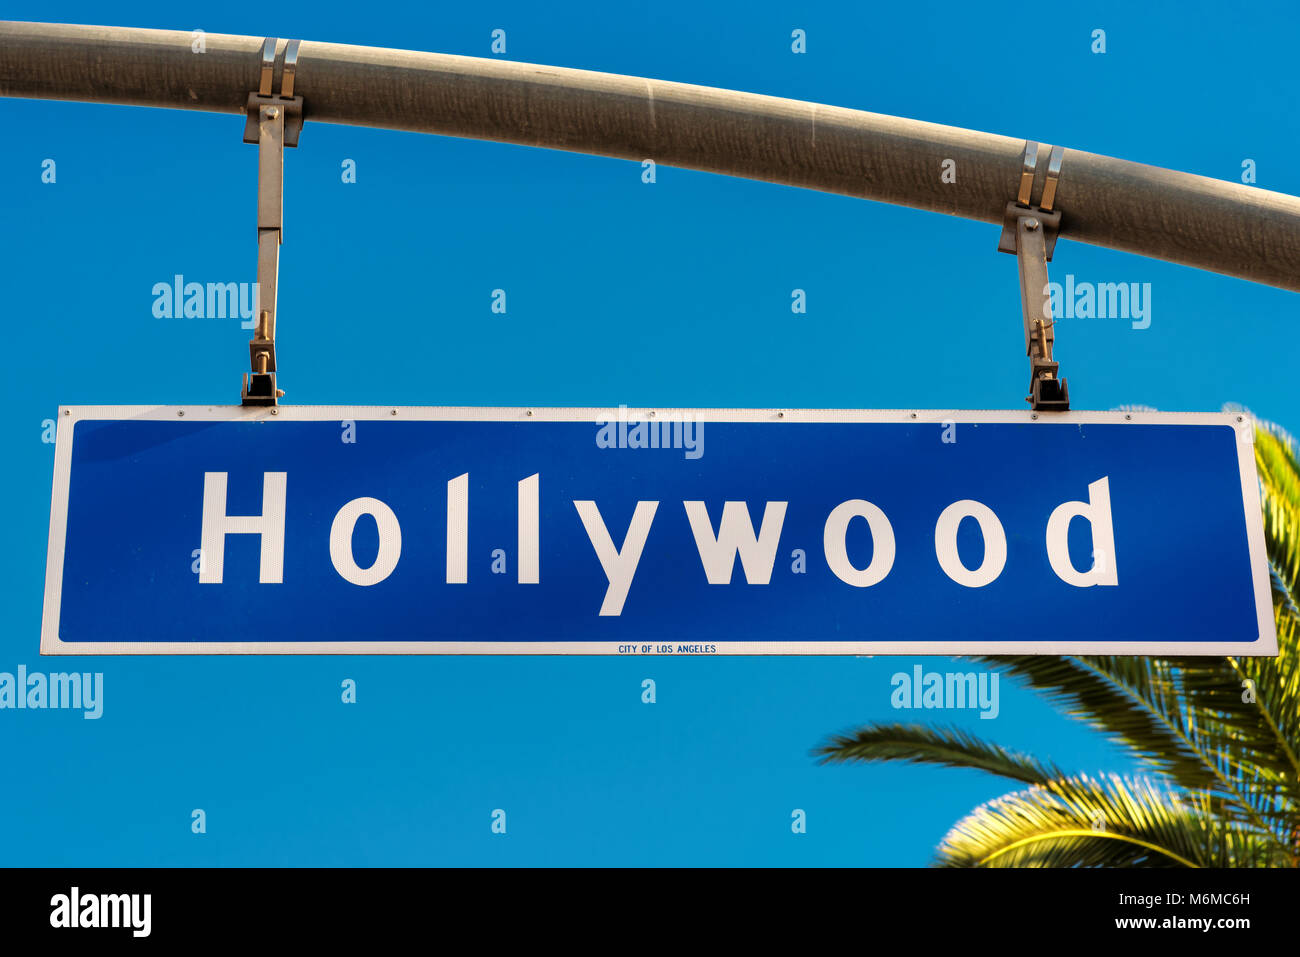 Hollywood boulevard street sign Stock Photo